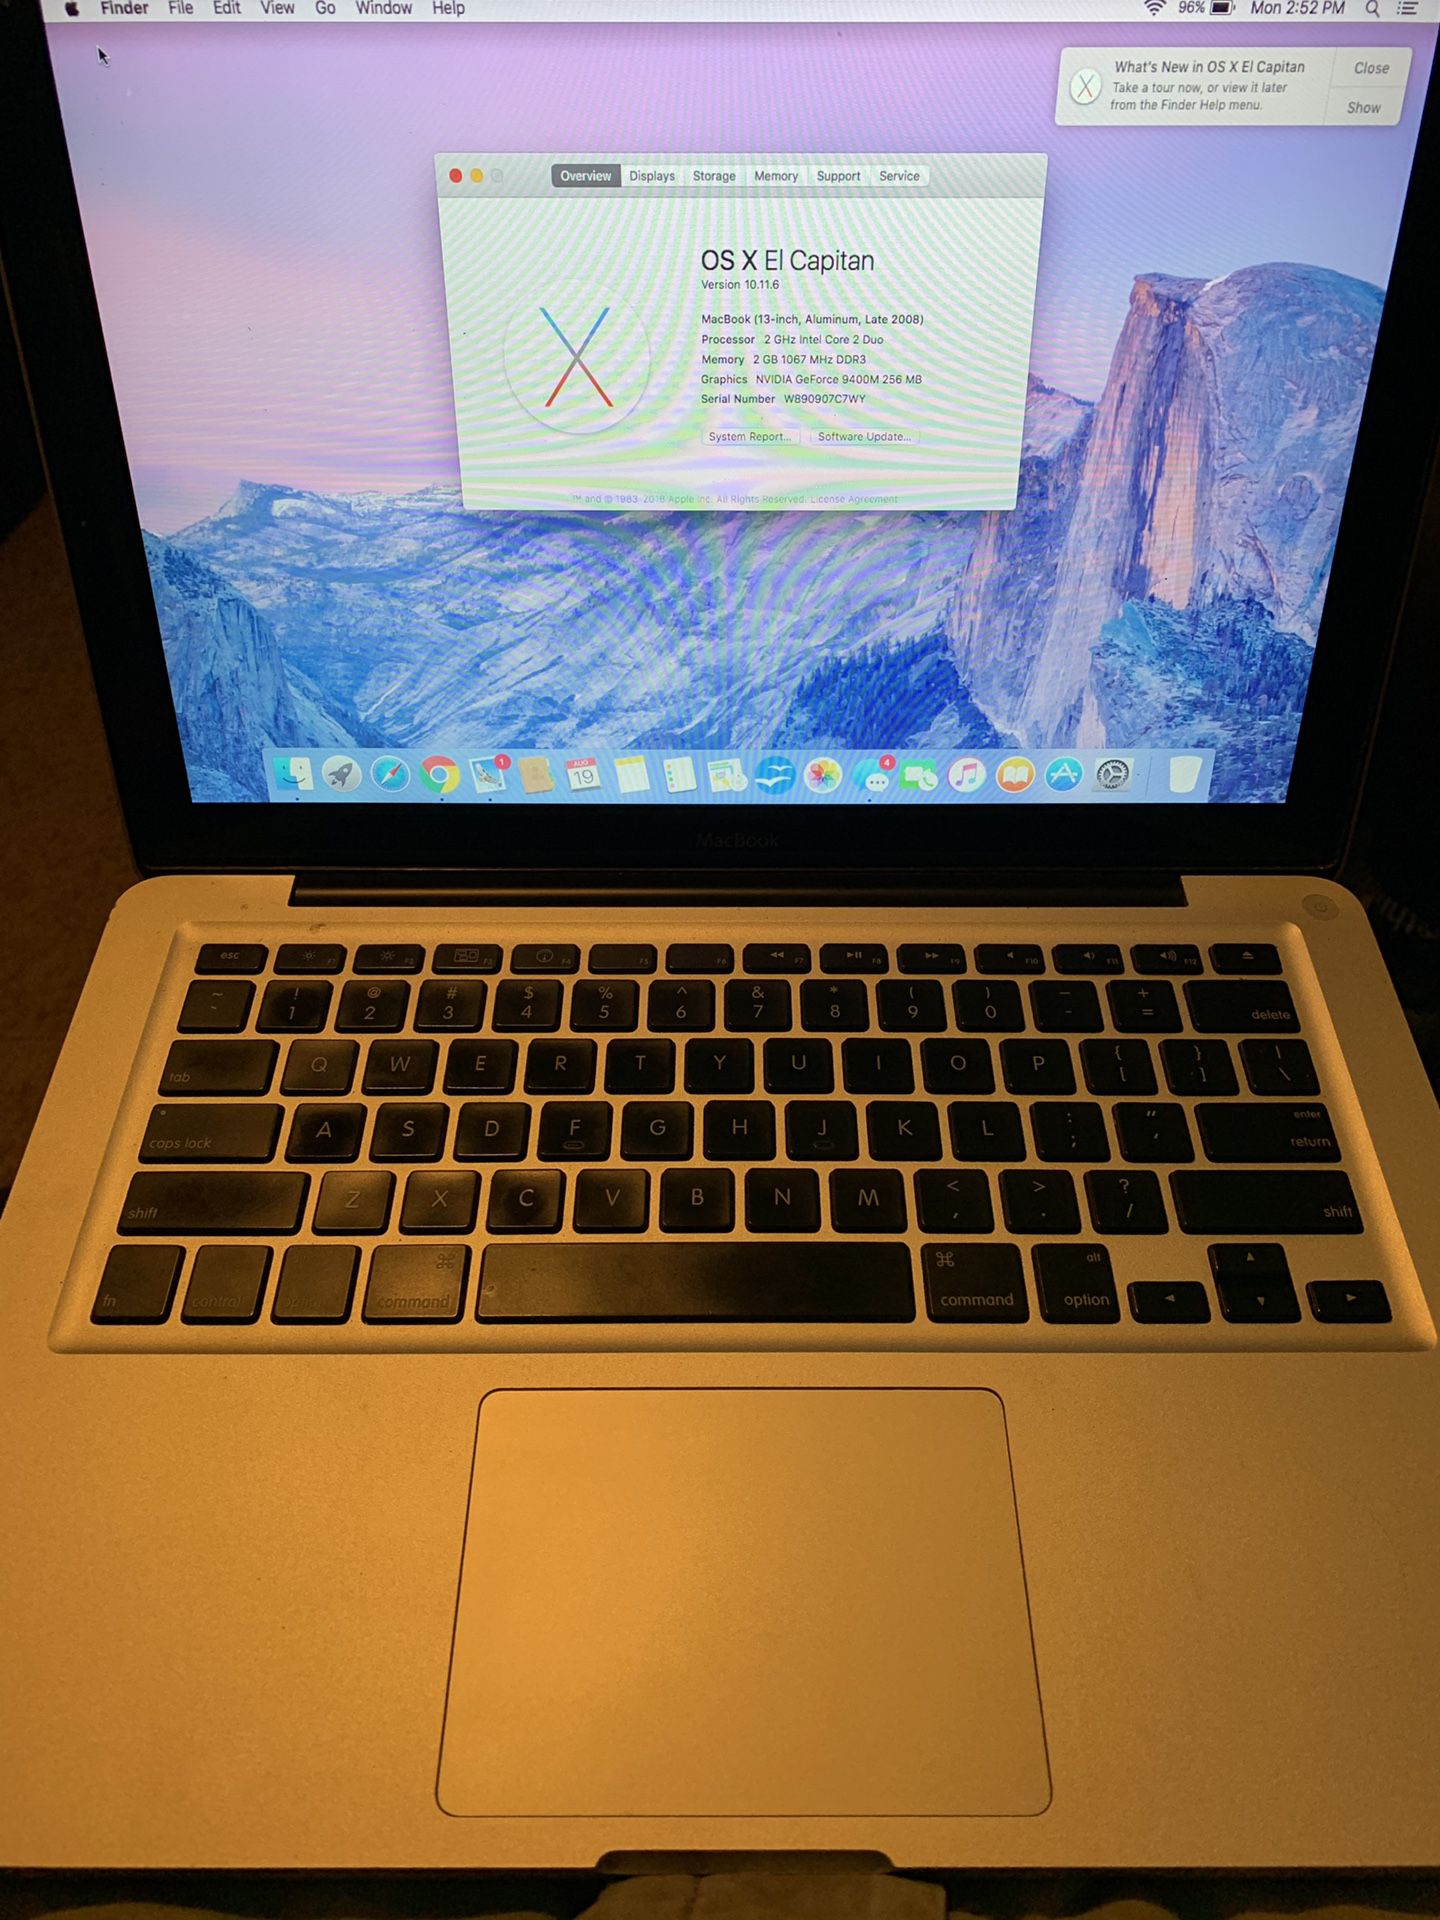 Macbook 13 inch open office installed